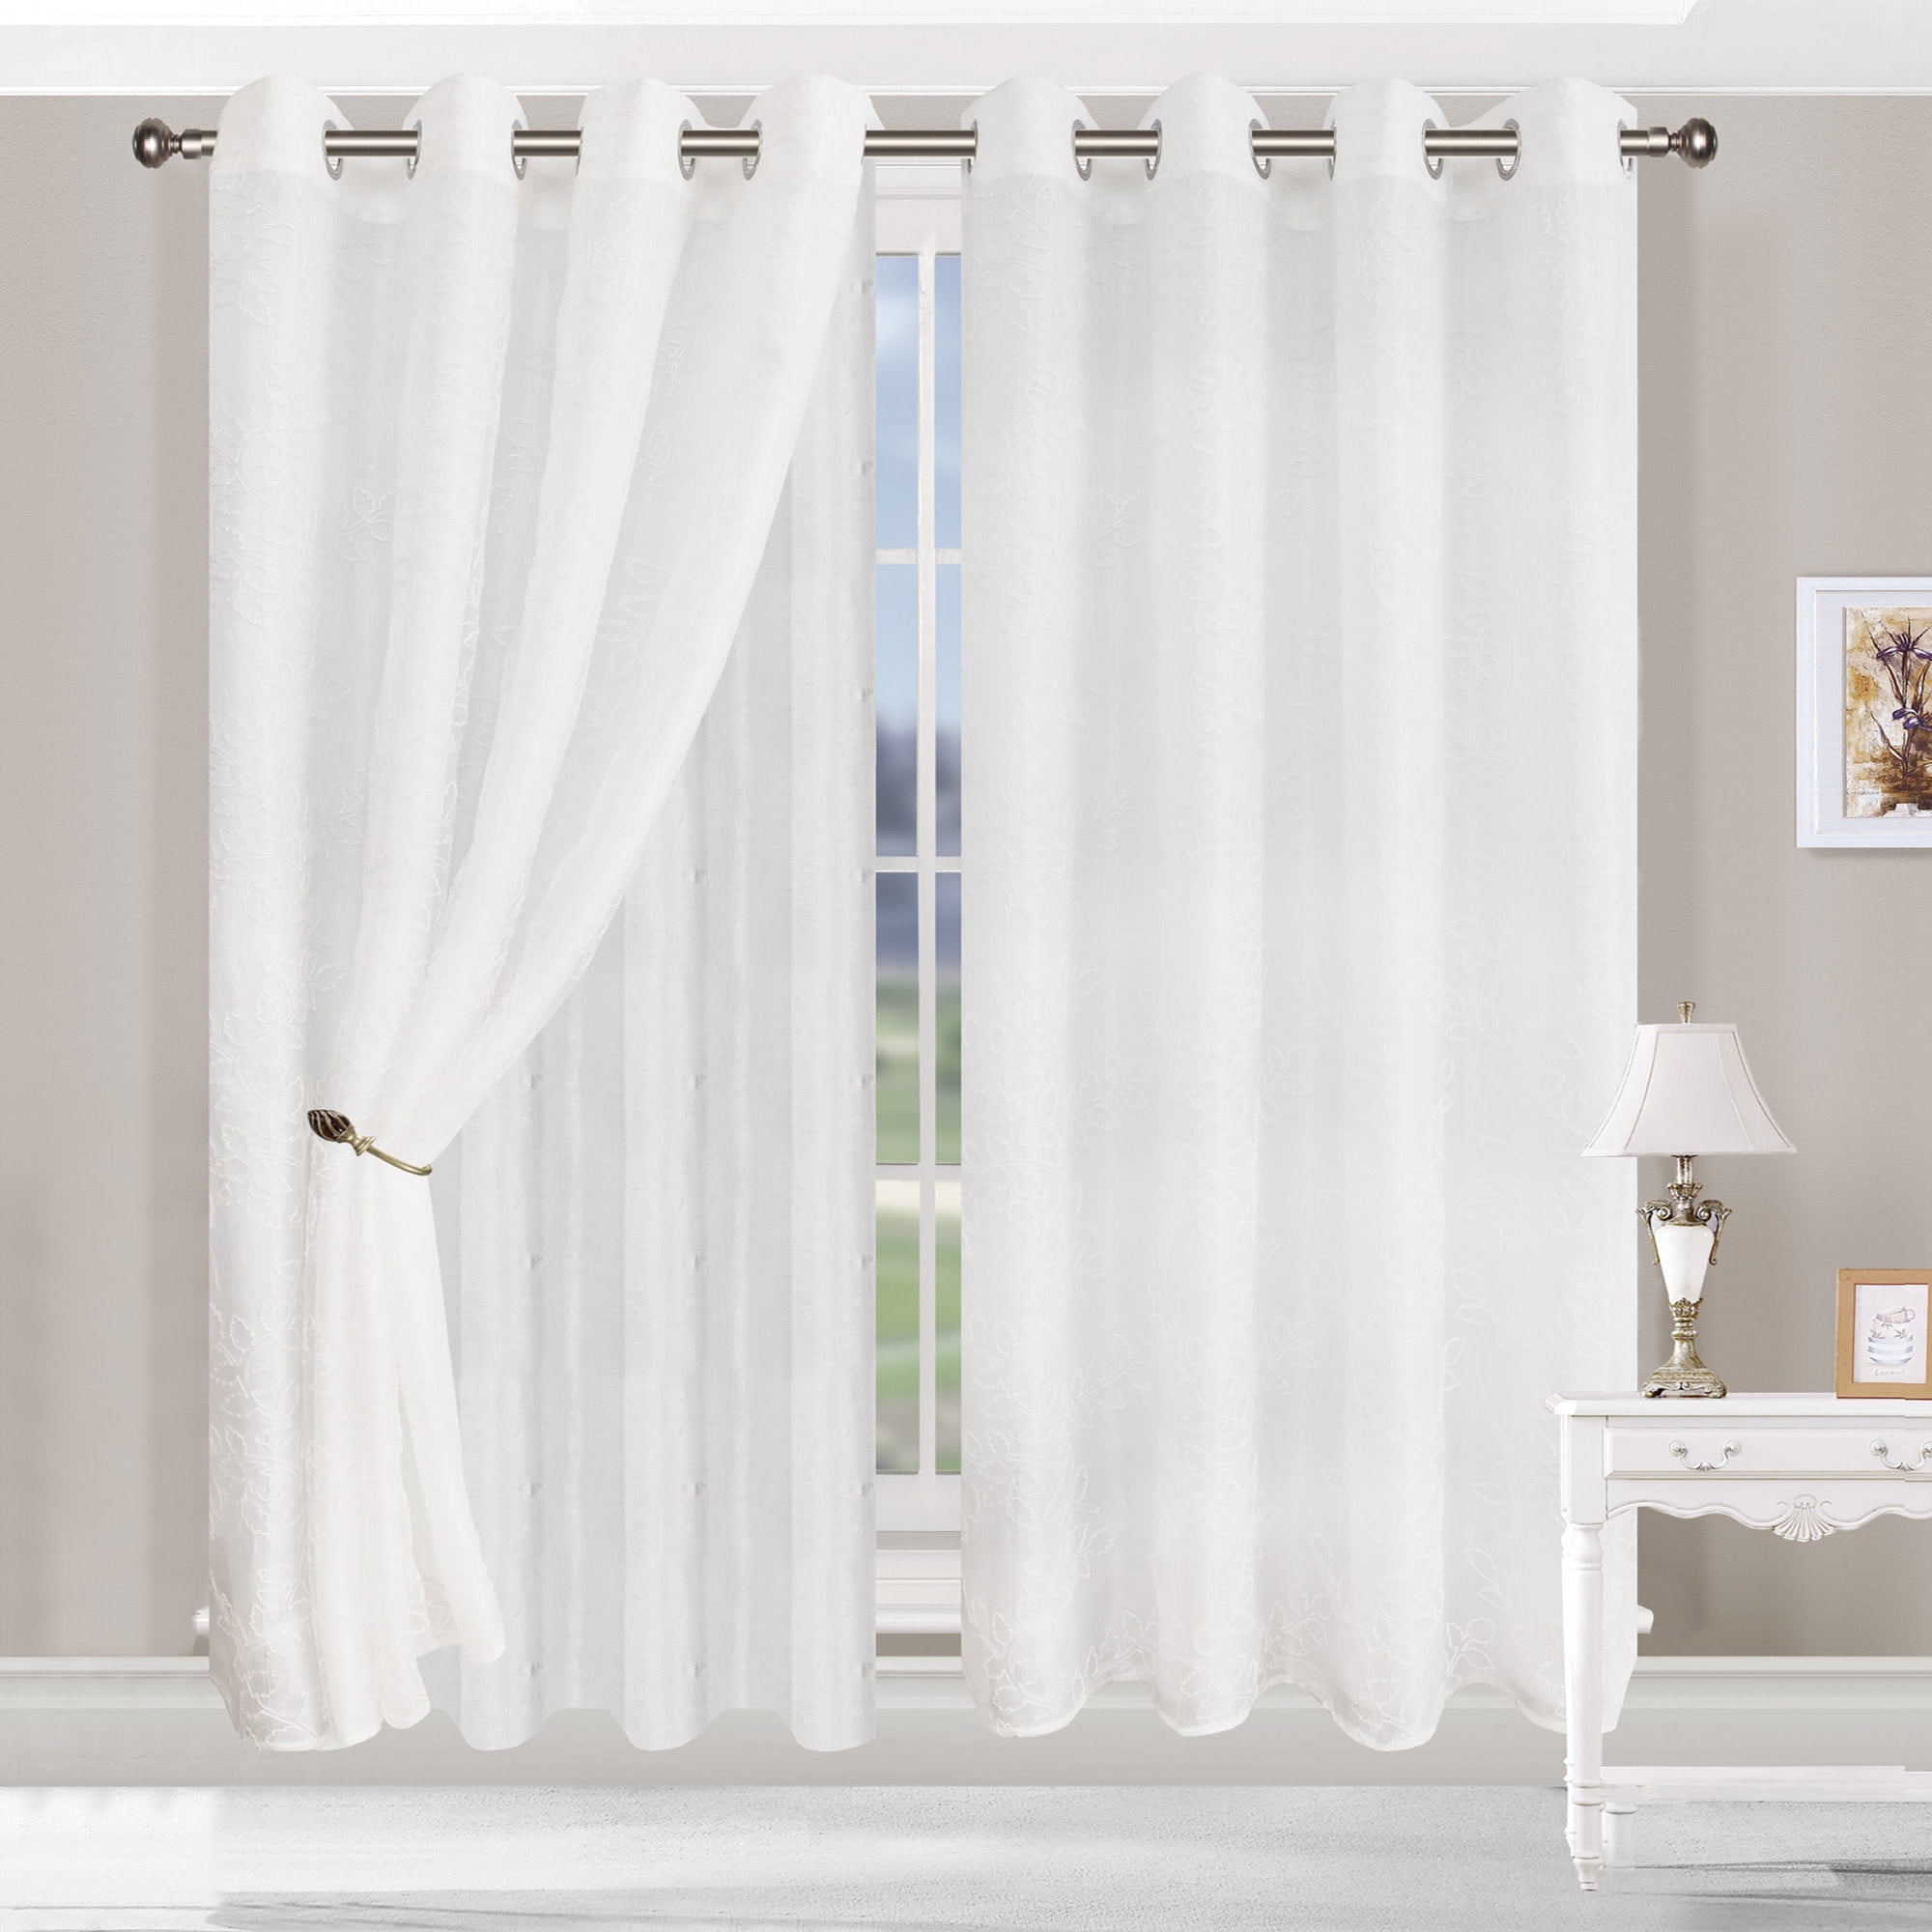 New Set of 2 White Sheer Rod Pocket Curtain Panels 48x63 for Smaller Windows 